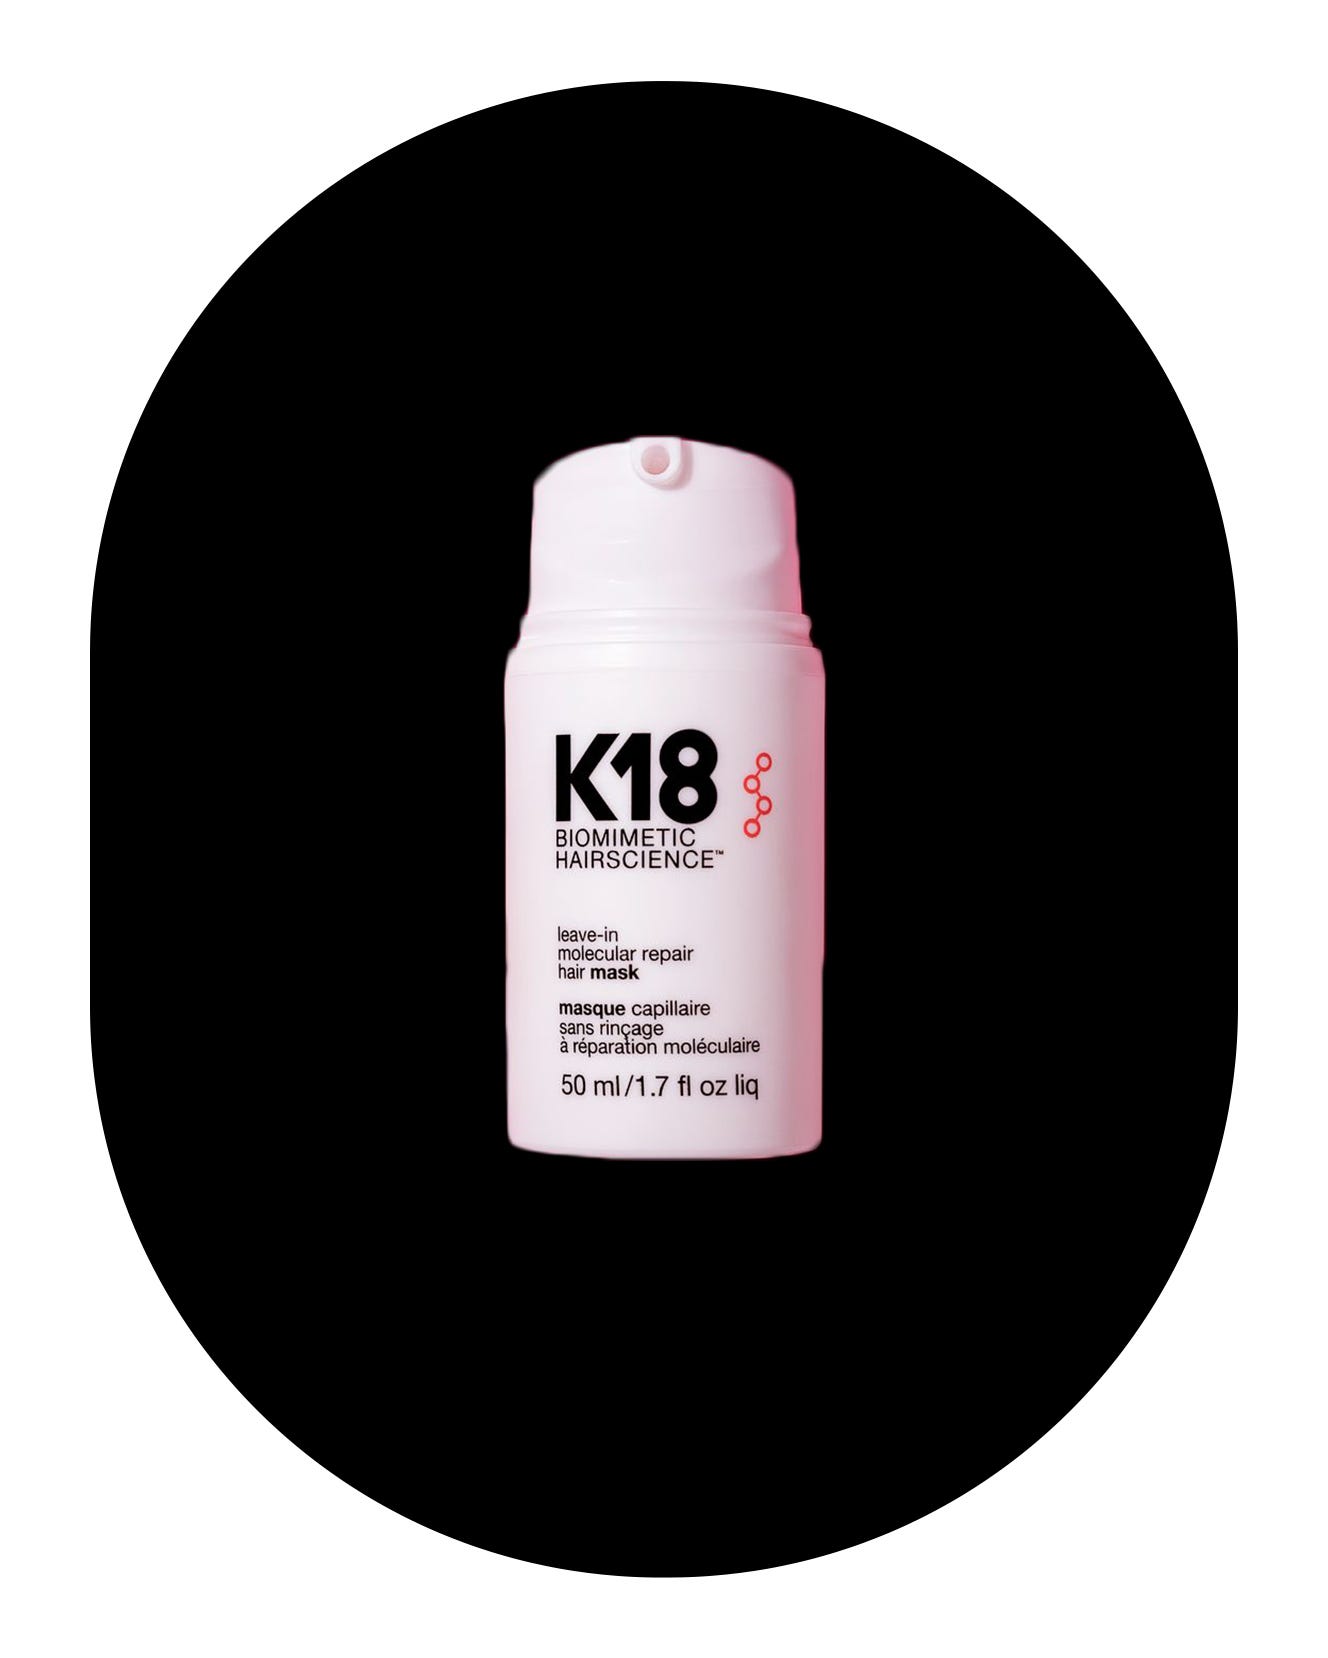 K18 Biomimetic Hairscience Leave-in Molecular Repair Mask